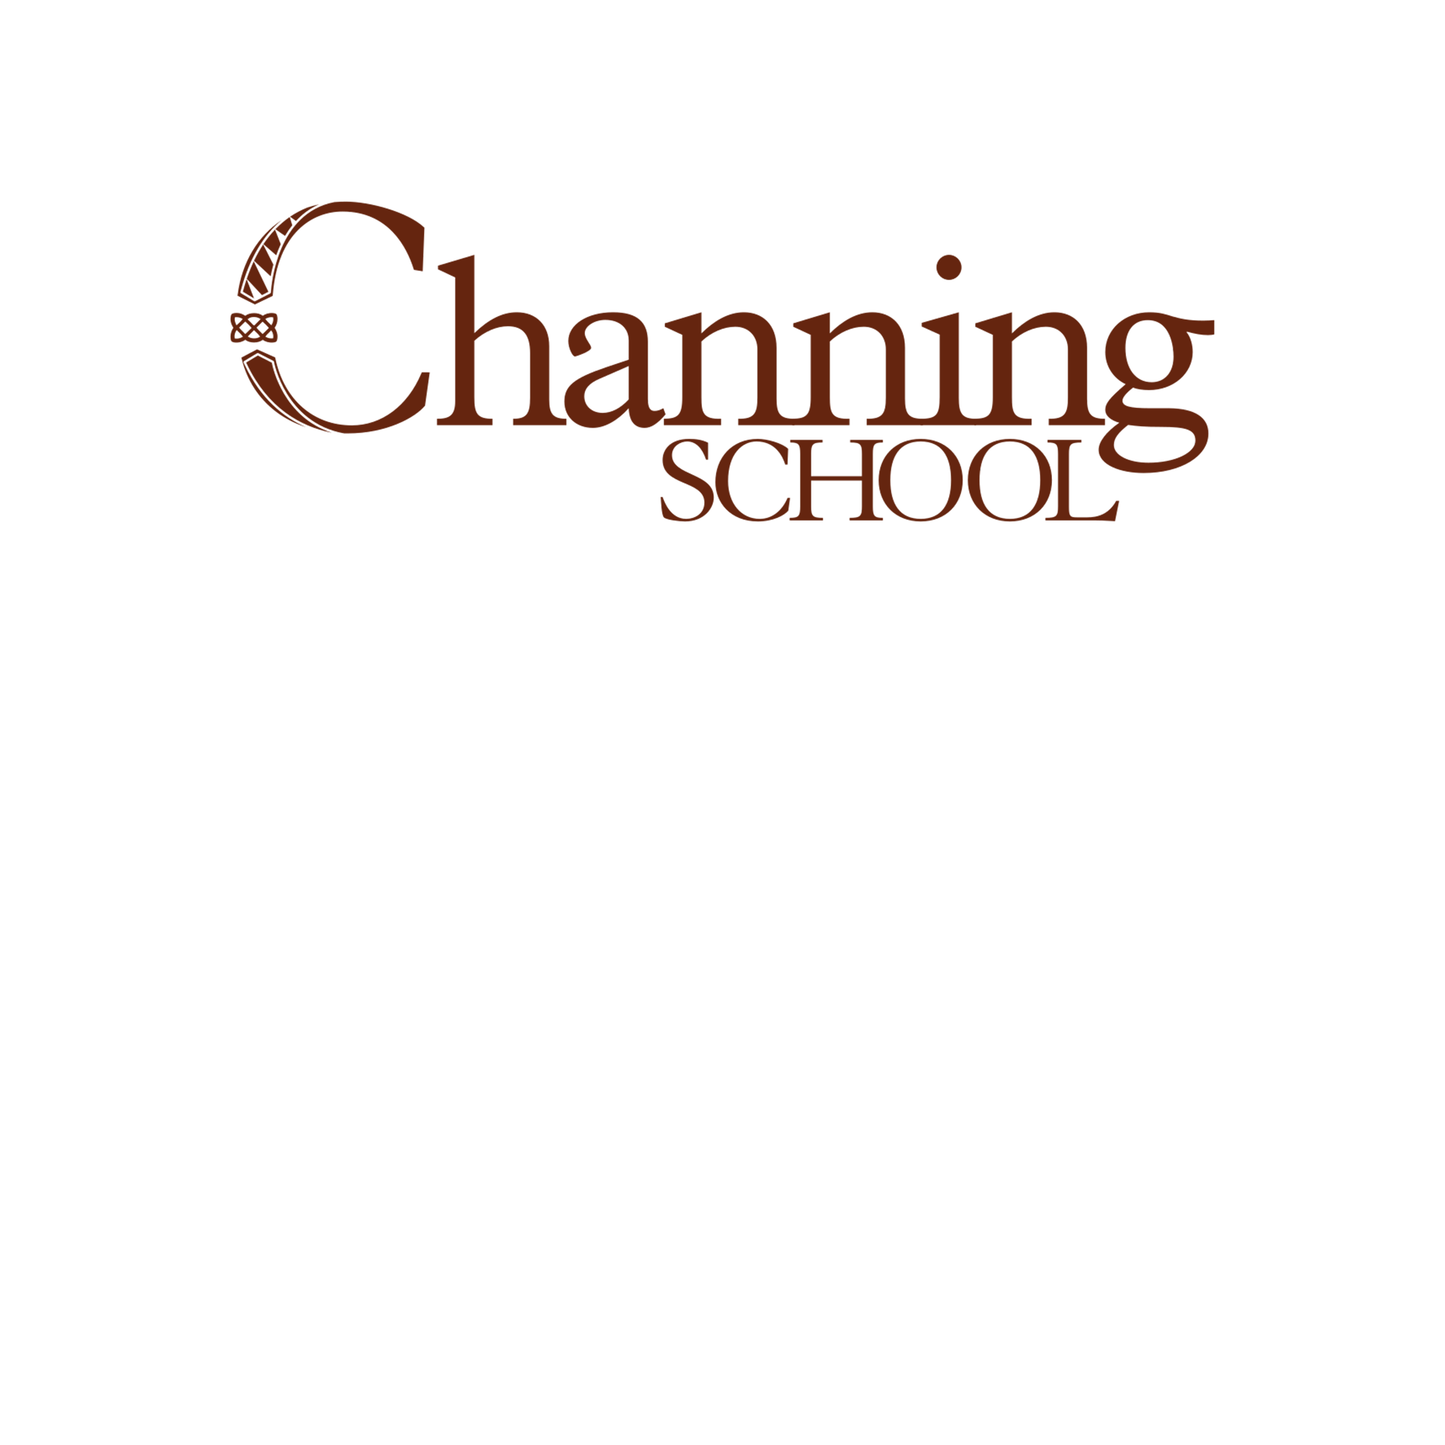 Channing School: 11+ English  [Version: 1]